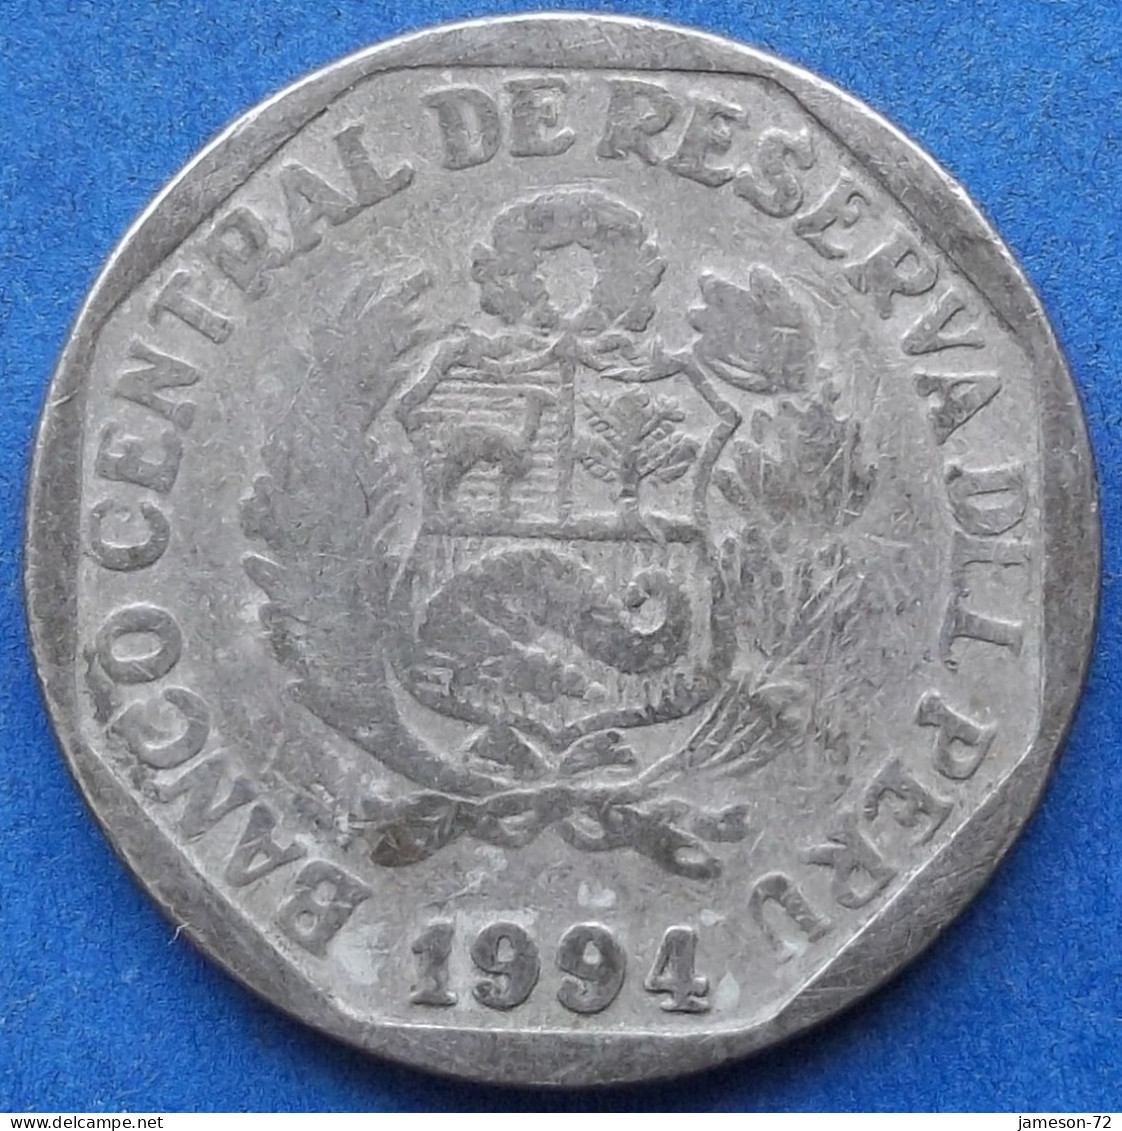 PERU - 1 Nuevo Sol 1994 KM# 308.1 Monetary Reform (1991) - Edelweiss Coins - Peru